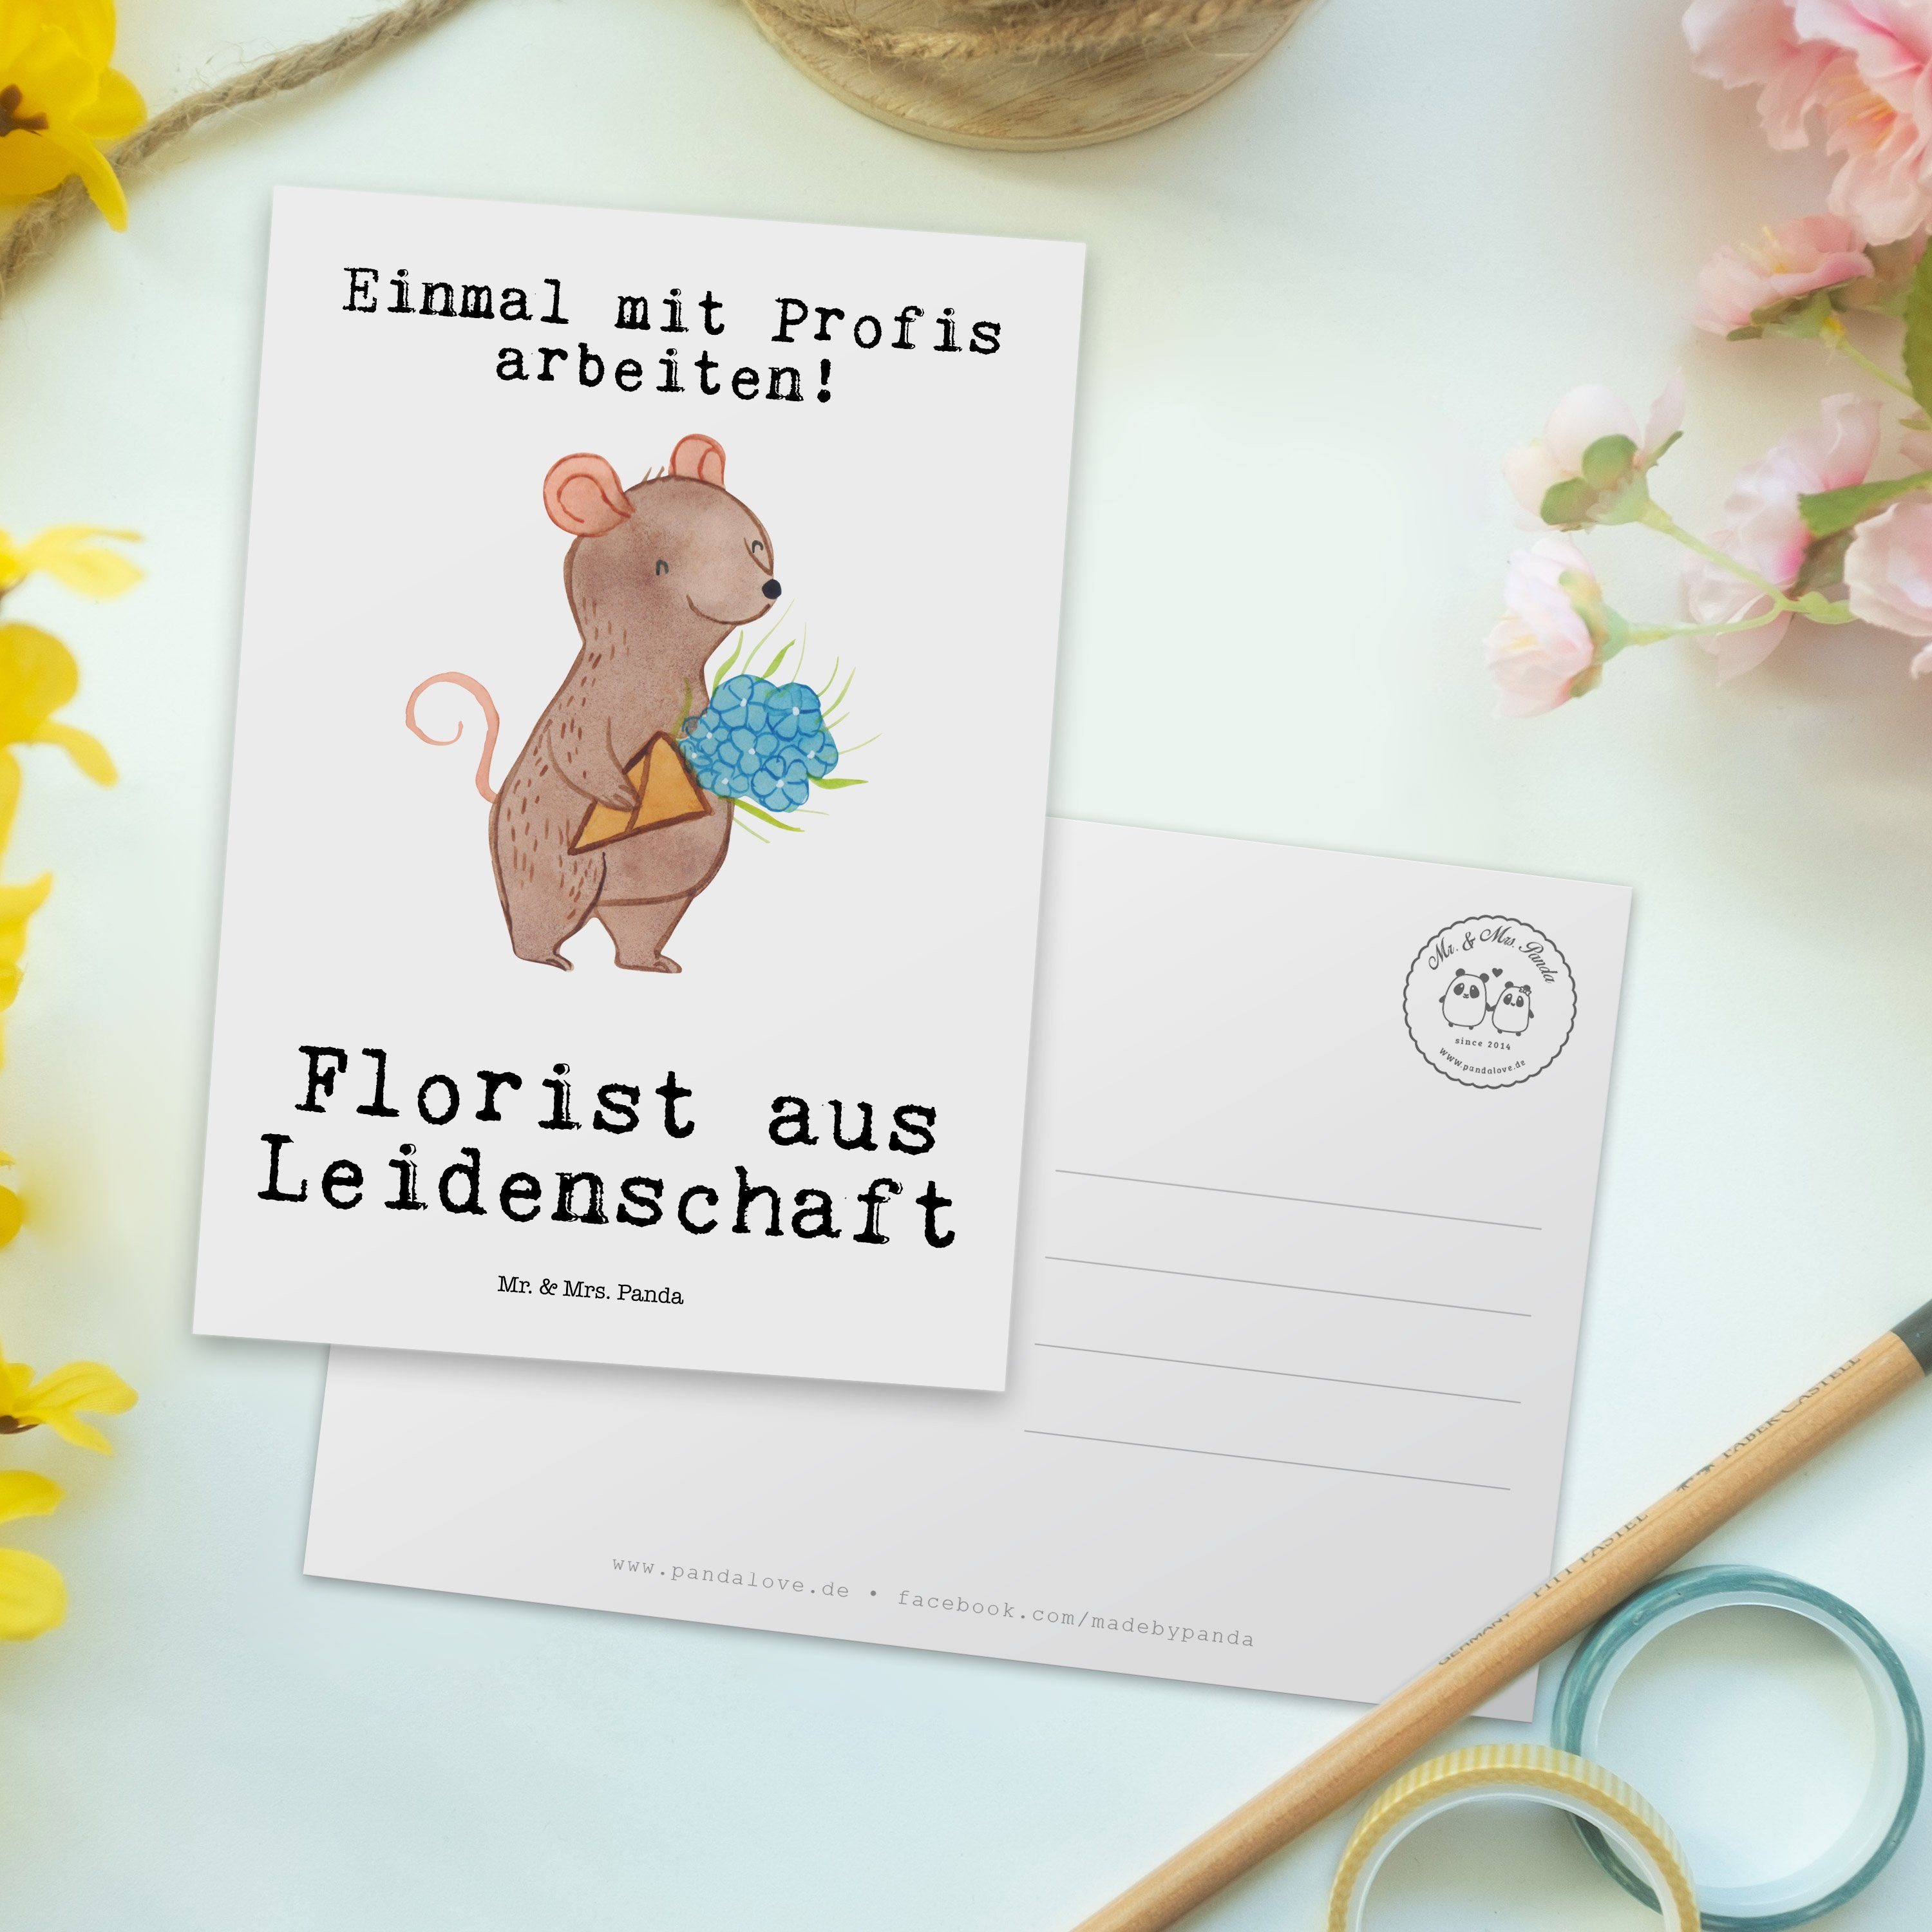 Mr. & Mrs. Panda Blumenp aus Weiß Postkarte - Geburtstagskarte, Leidenschaft Geschenk, Florist 